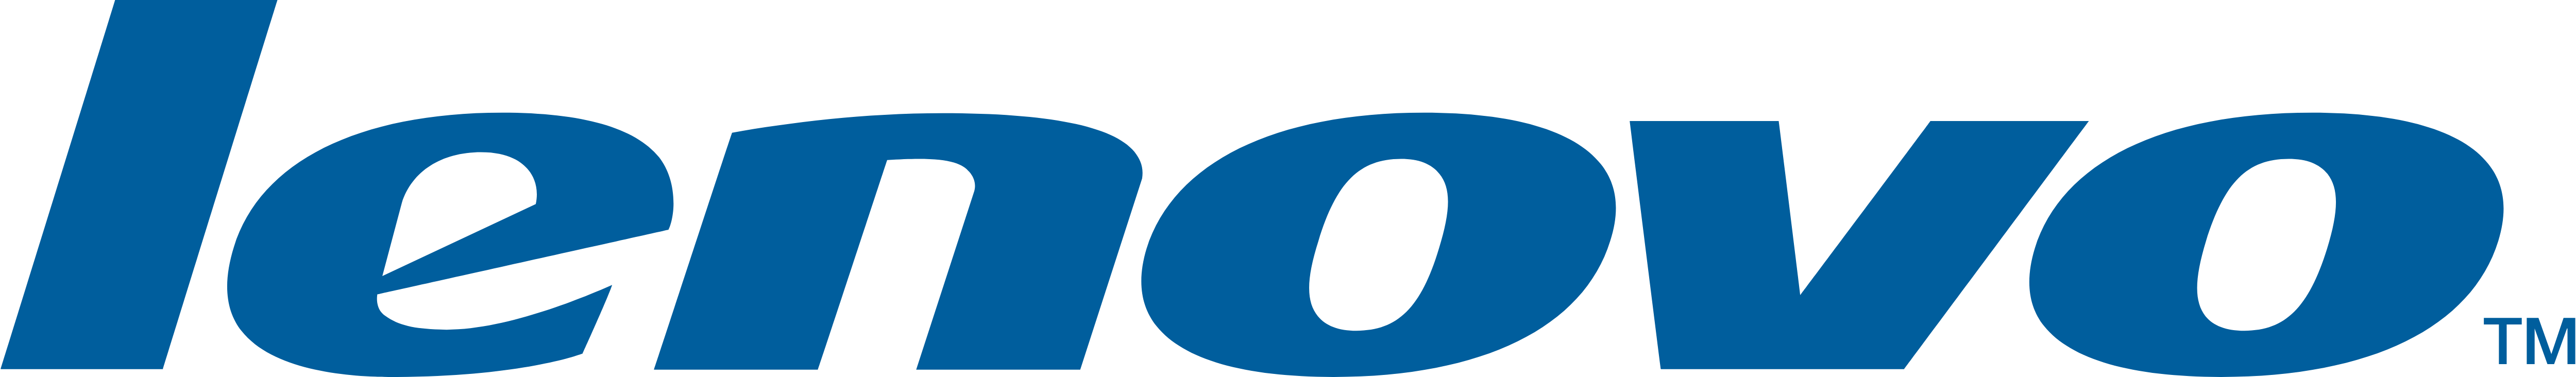 Lenovo_logo_tm